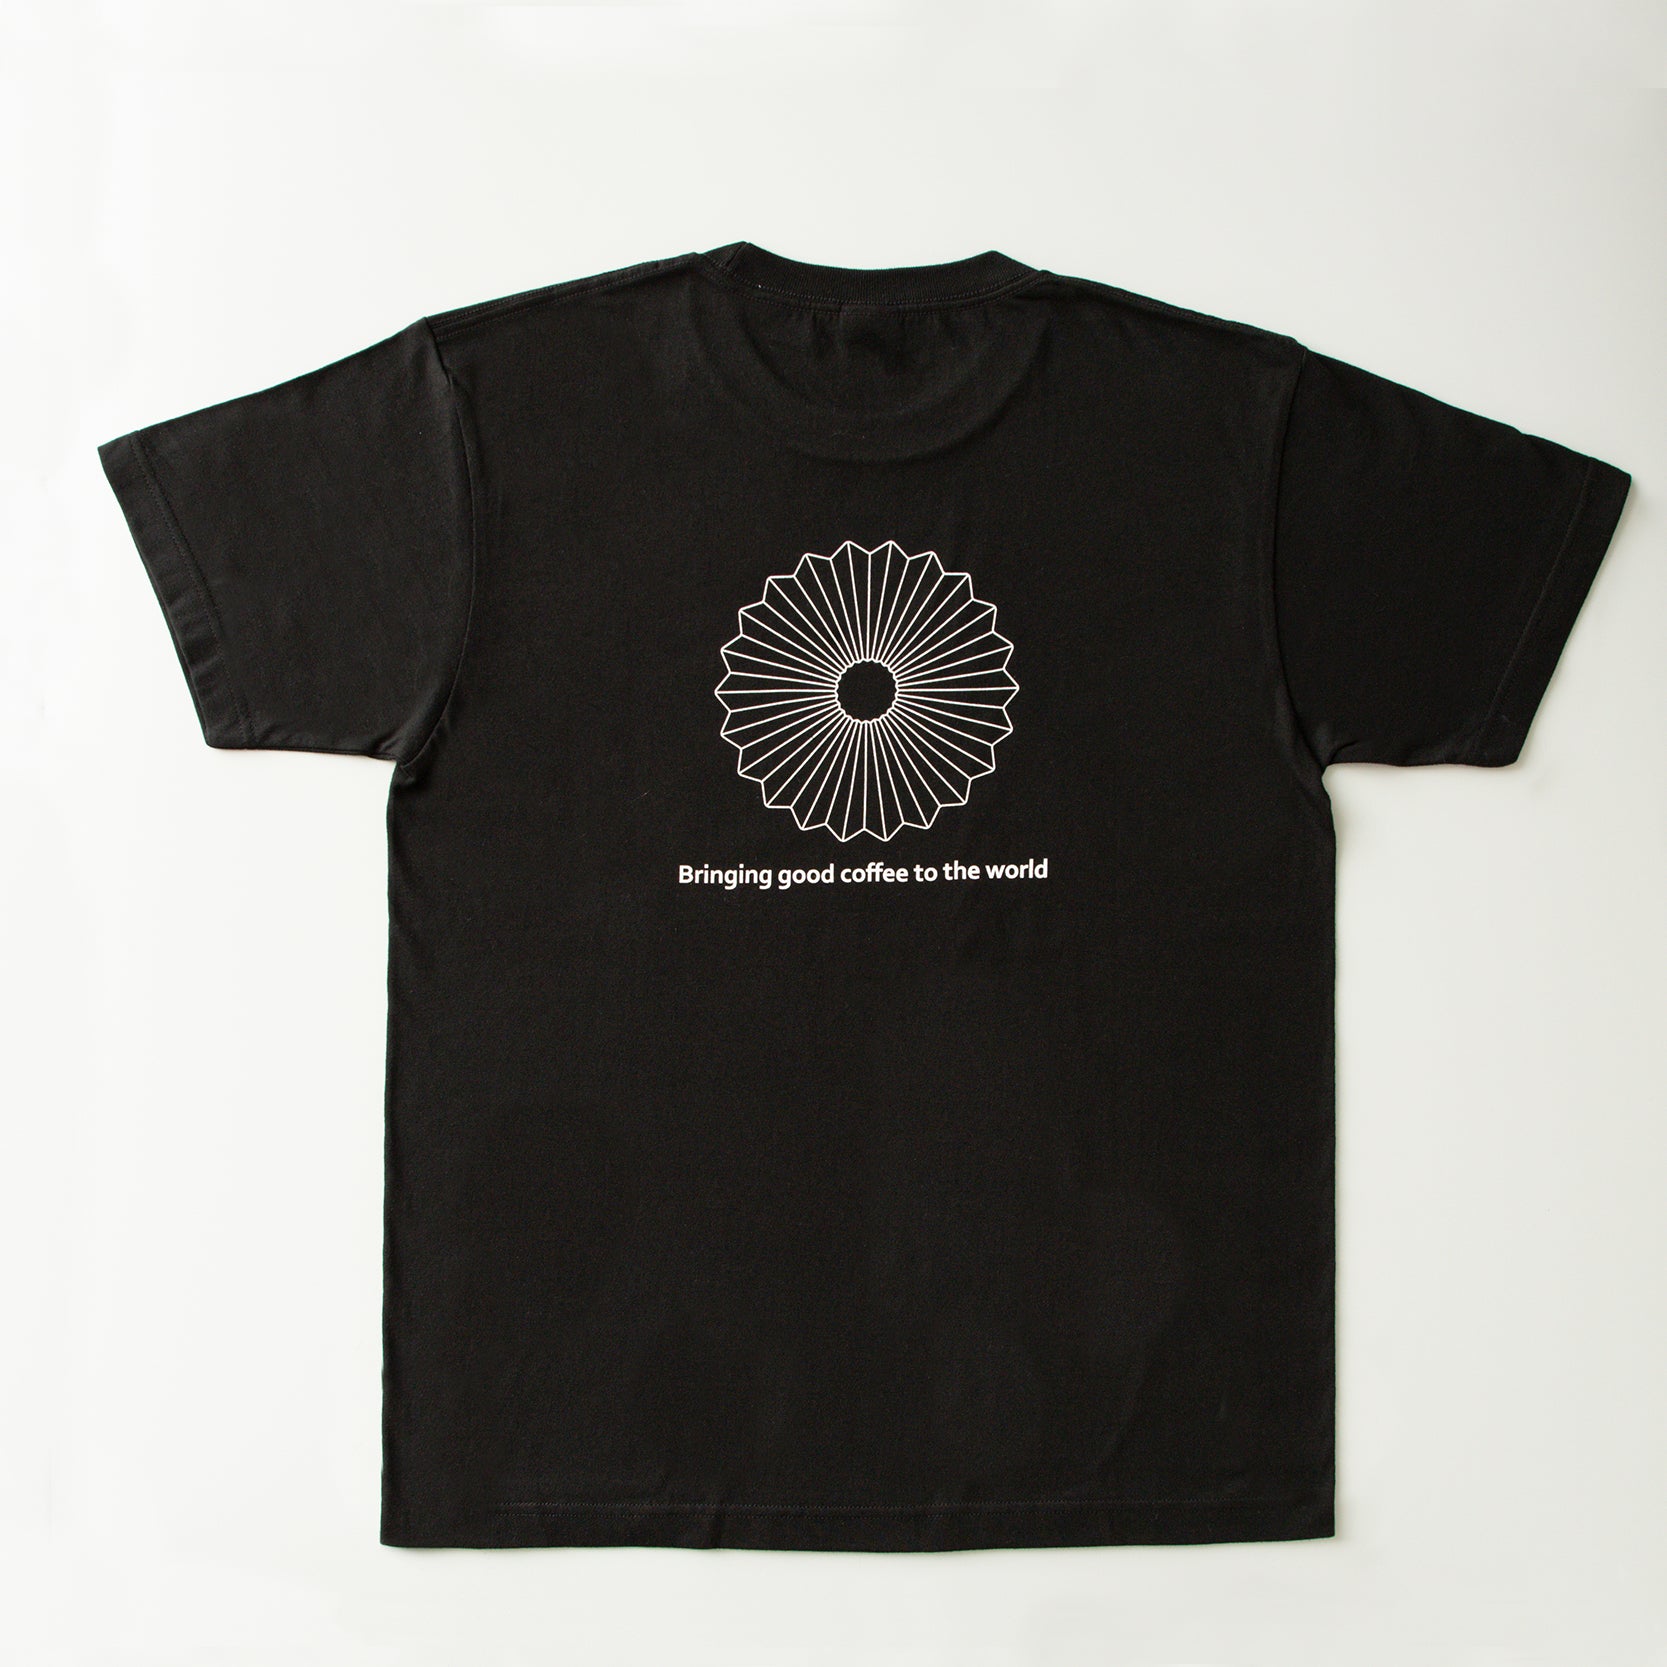 【EC limited】ORIGAMI T-shirts